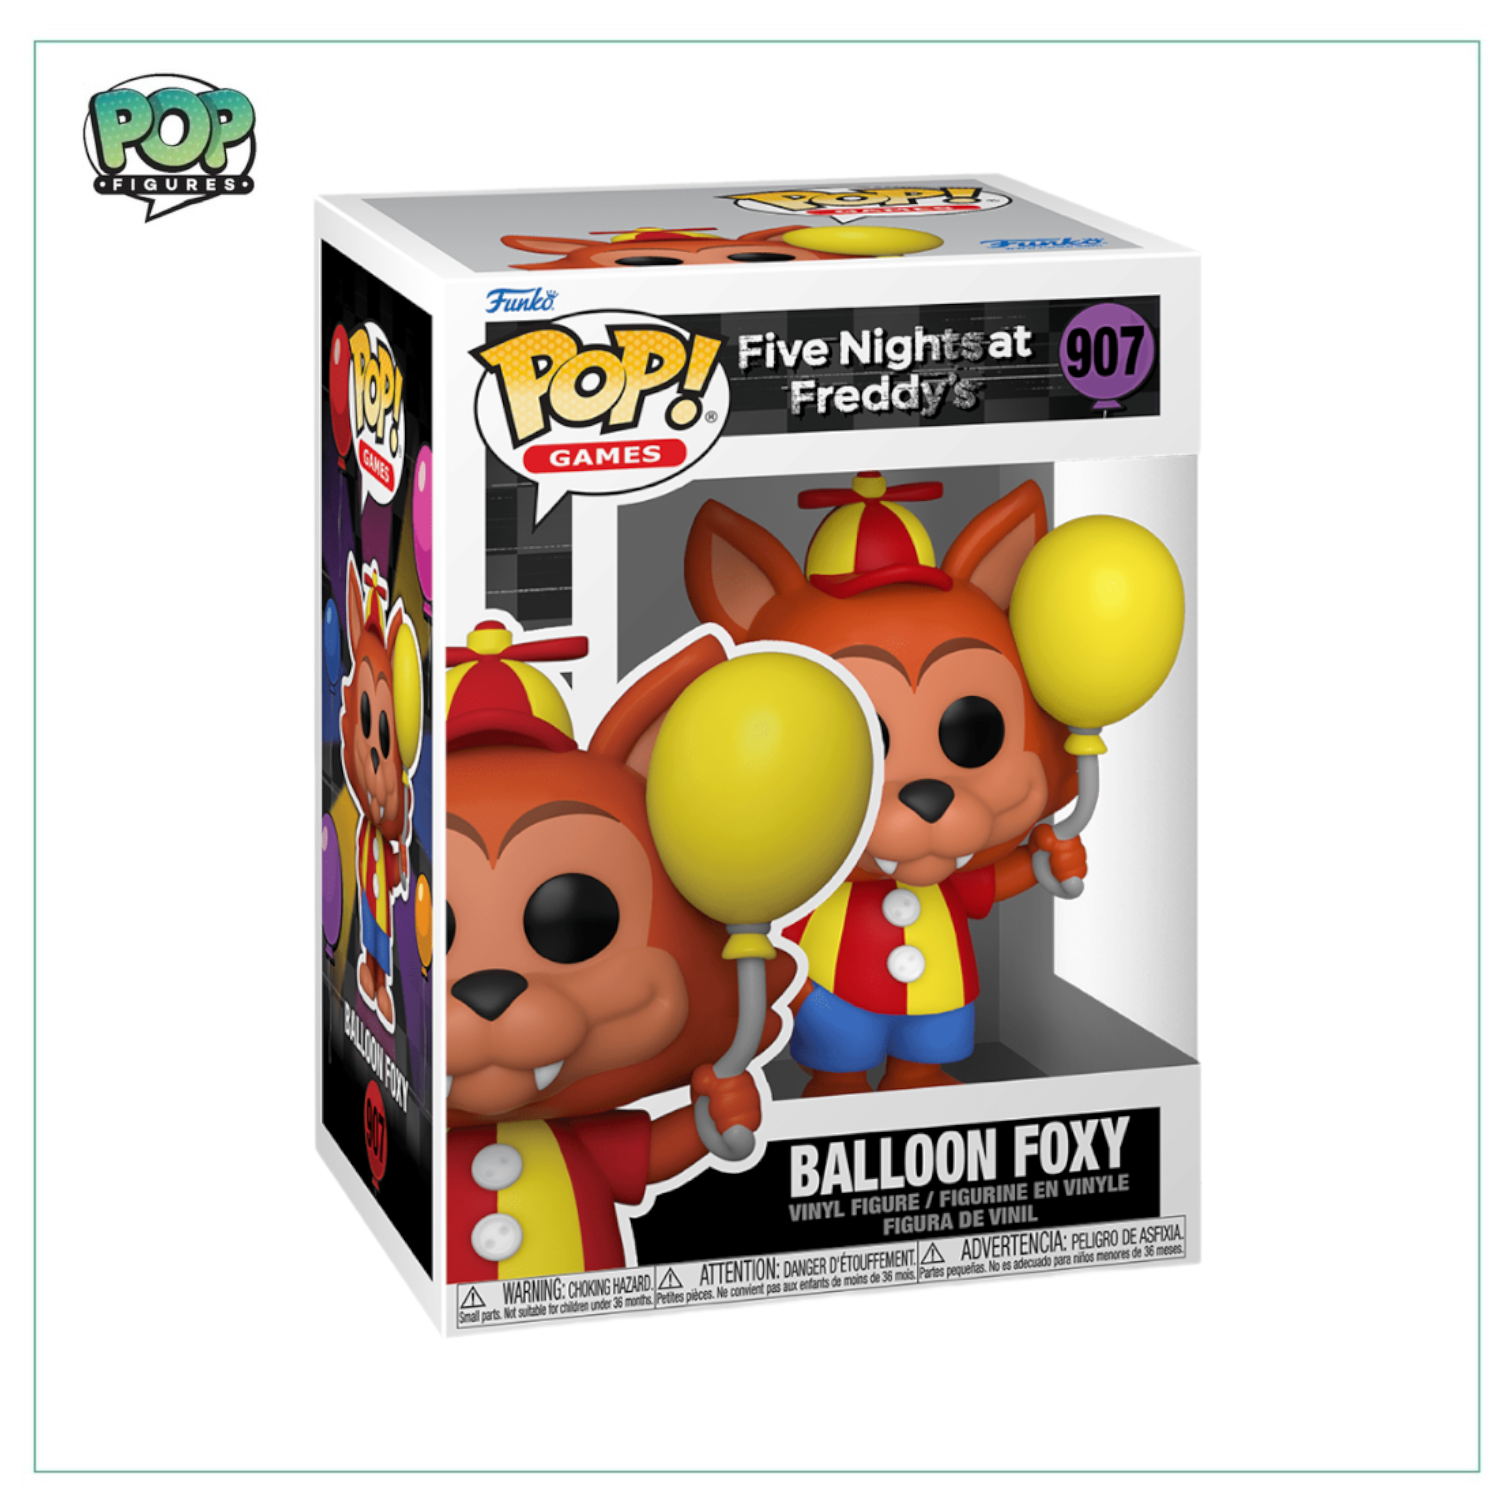 Balloon Foxy #907 Funko Pop! - Five Night’s at Freddy’s